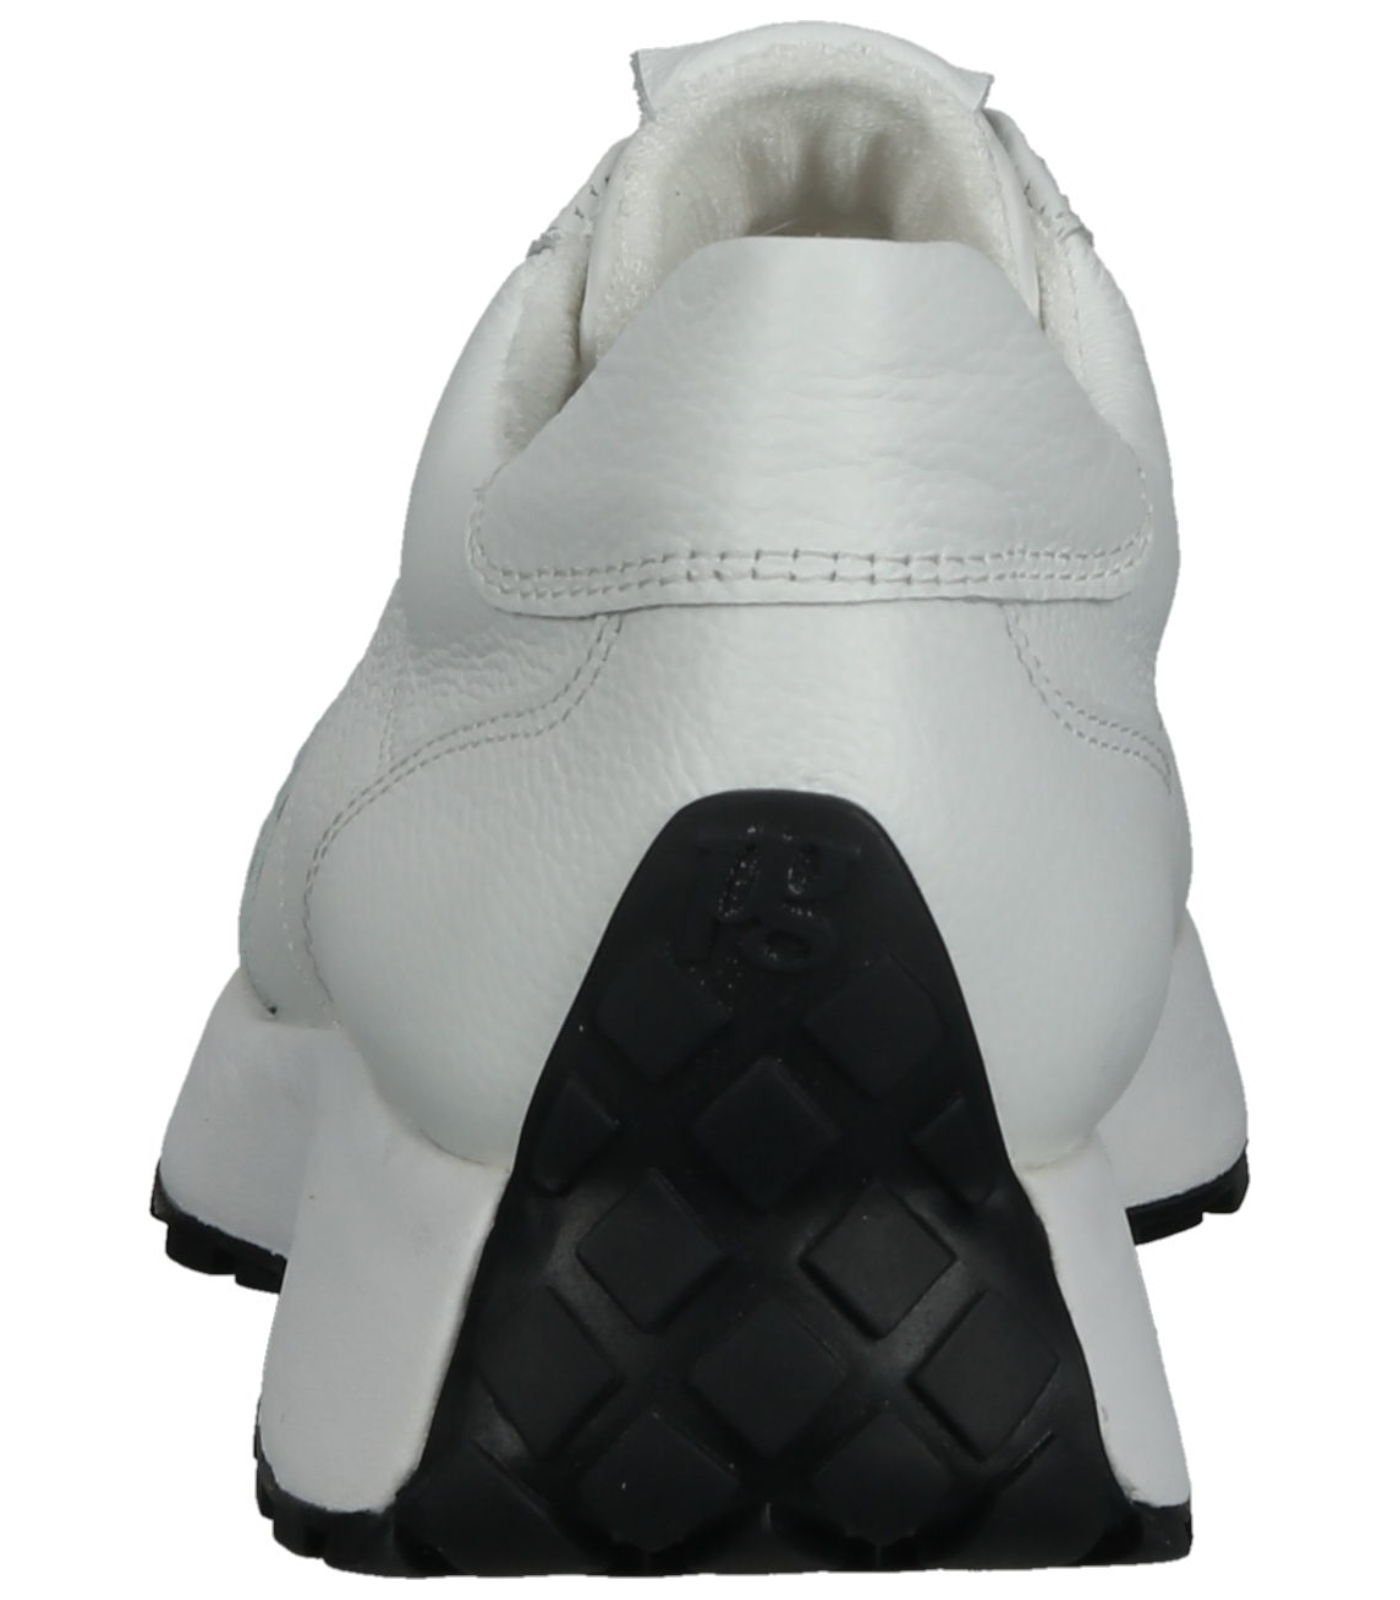 Paul Leder/Textil Sneaker Sneaker Green (17001602) Weiß